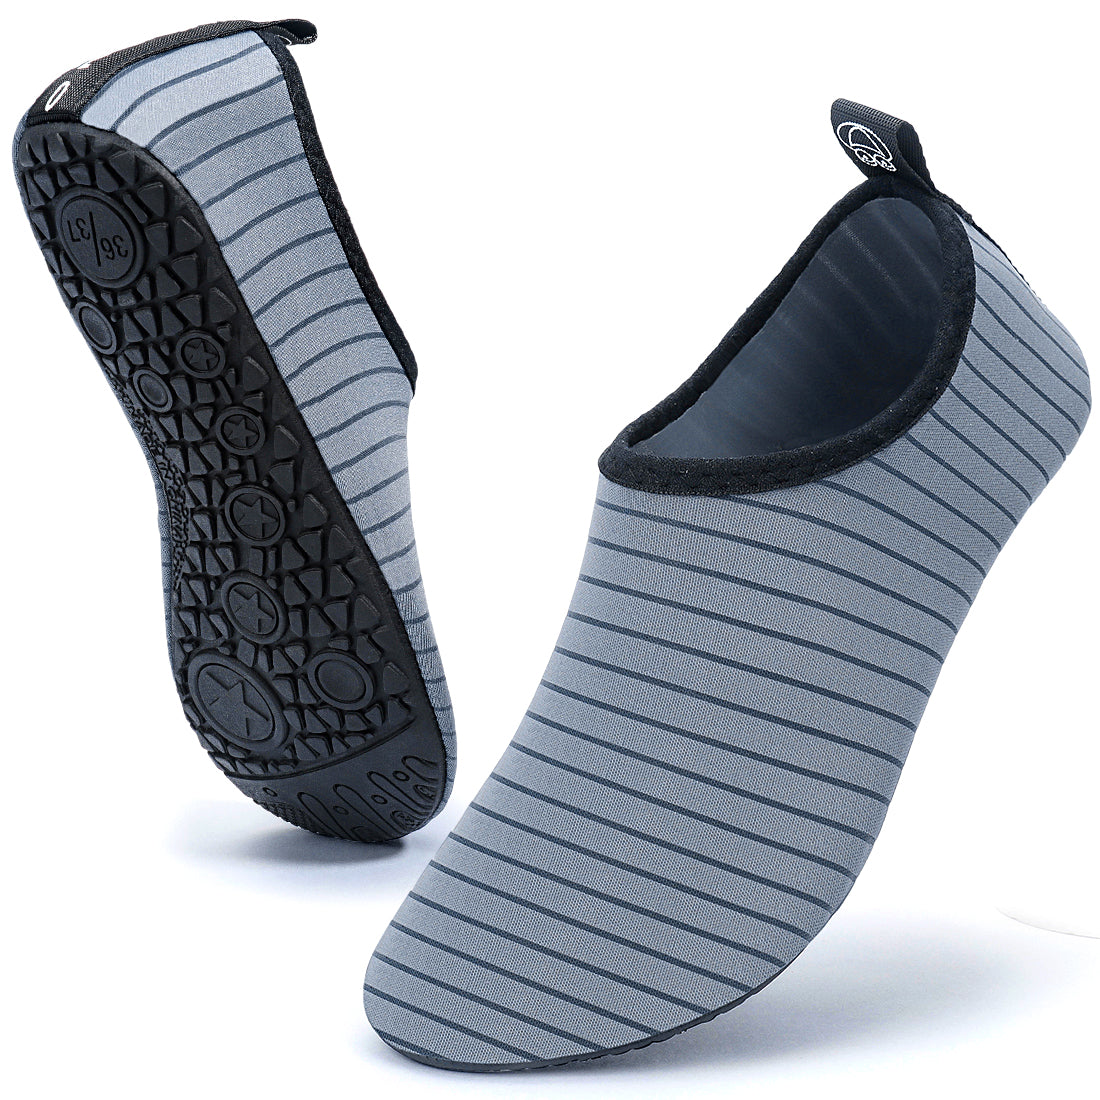  VIFUUR Water Sports Unisex Shoes Black - 4-5 W US / 3-4 M US  (34-35)